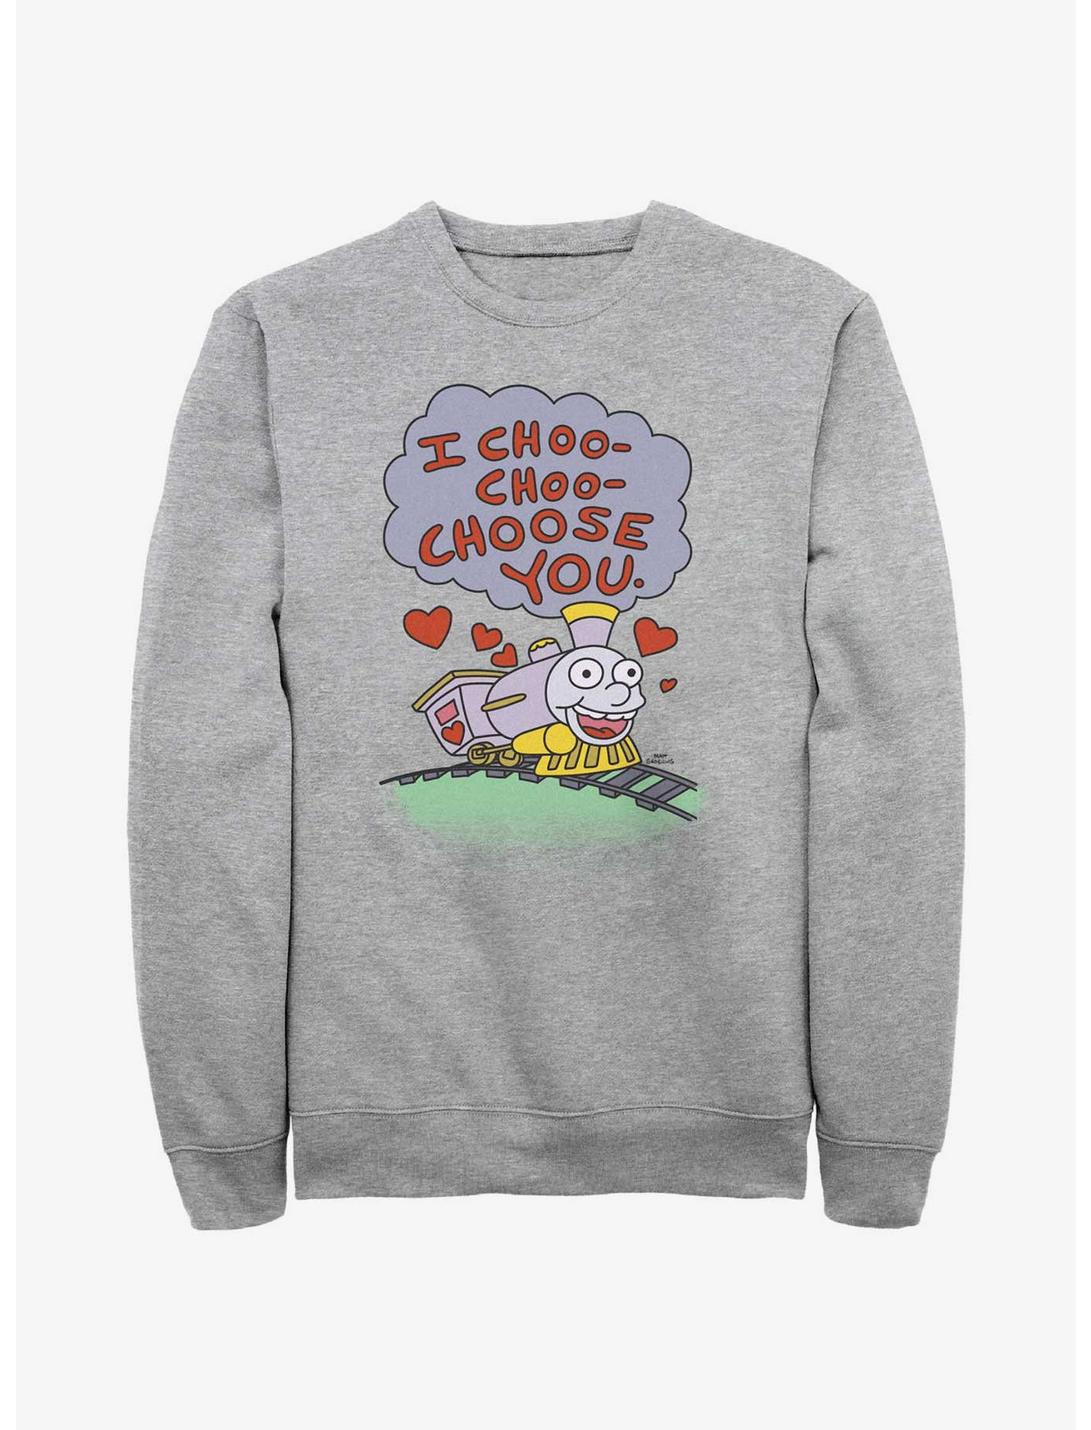 Simpsons Choo-Choose You Sweatshirt, ATH HTR, hi-res